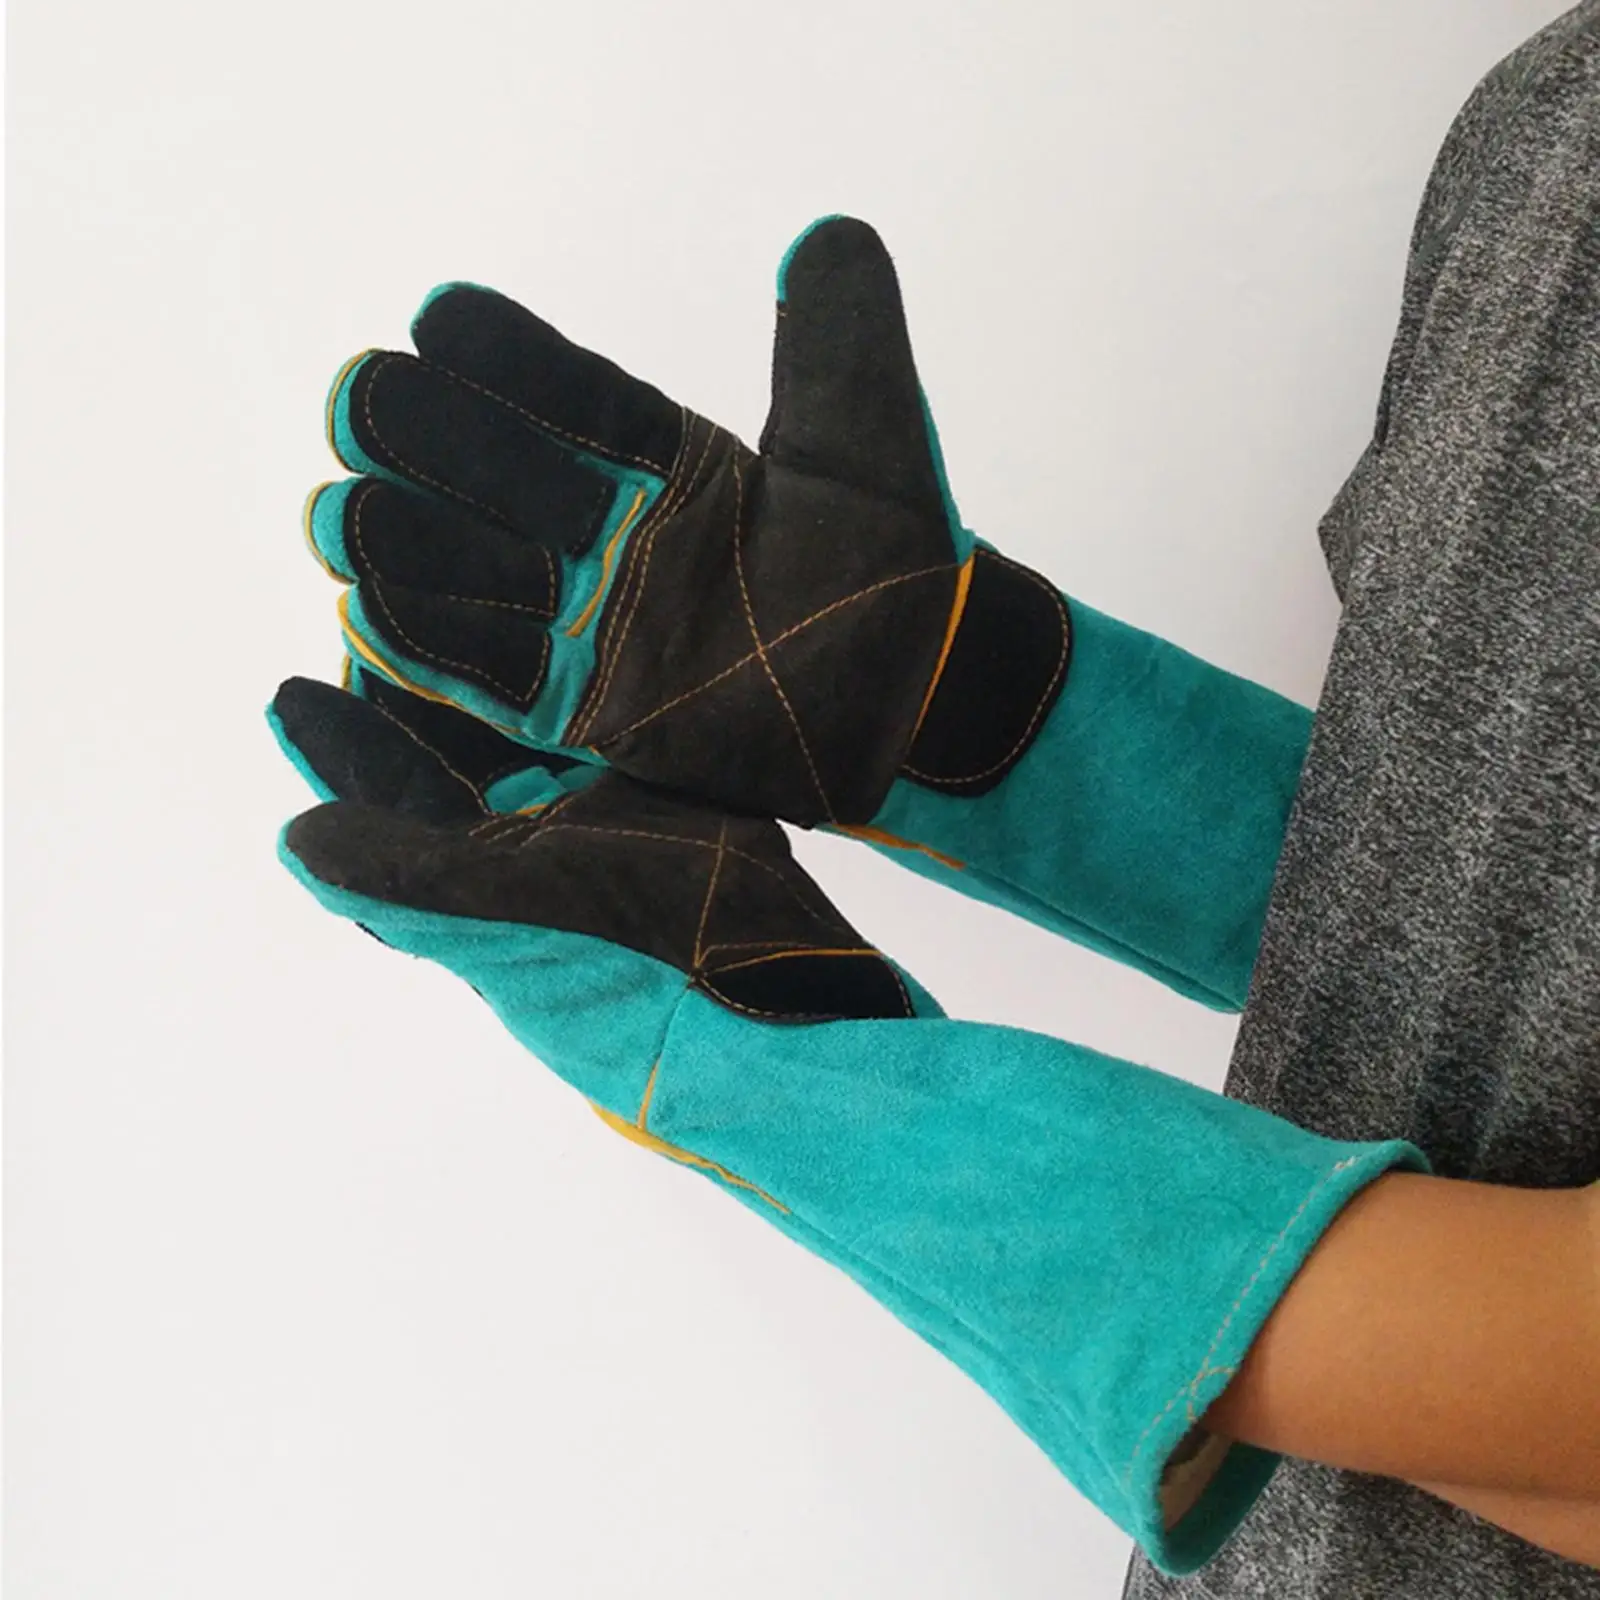 Pet Bite Resistant Gloves 38cm Animal Handling Gloves for Welding, Gardening, Handling Dog Cat Lizard Wild Animals Pet Training